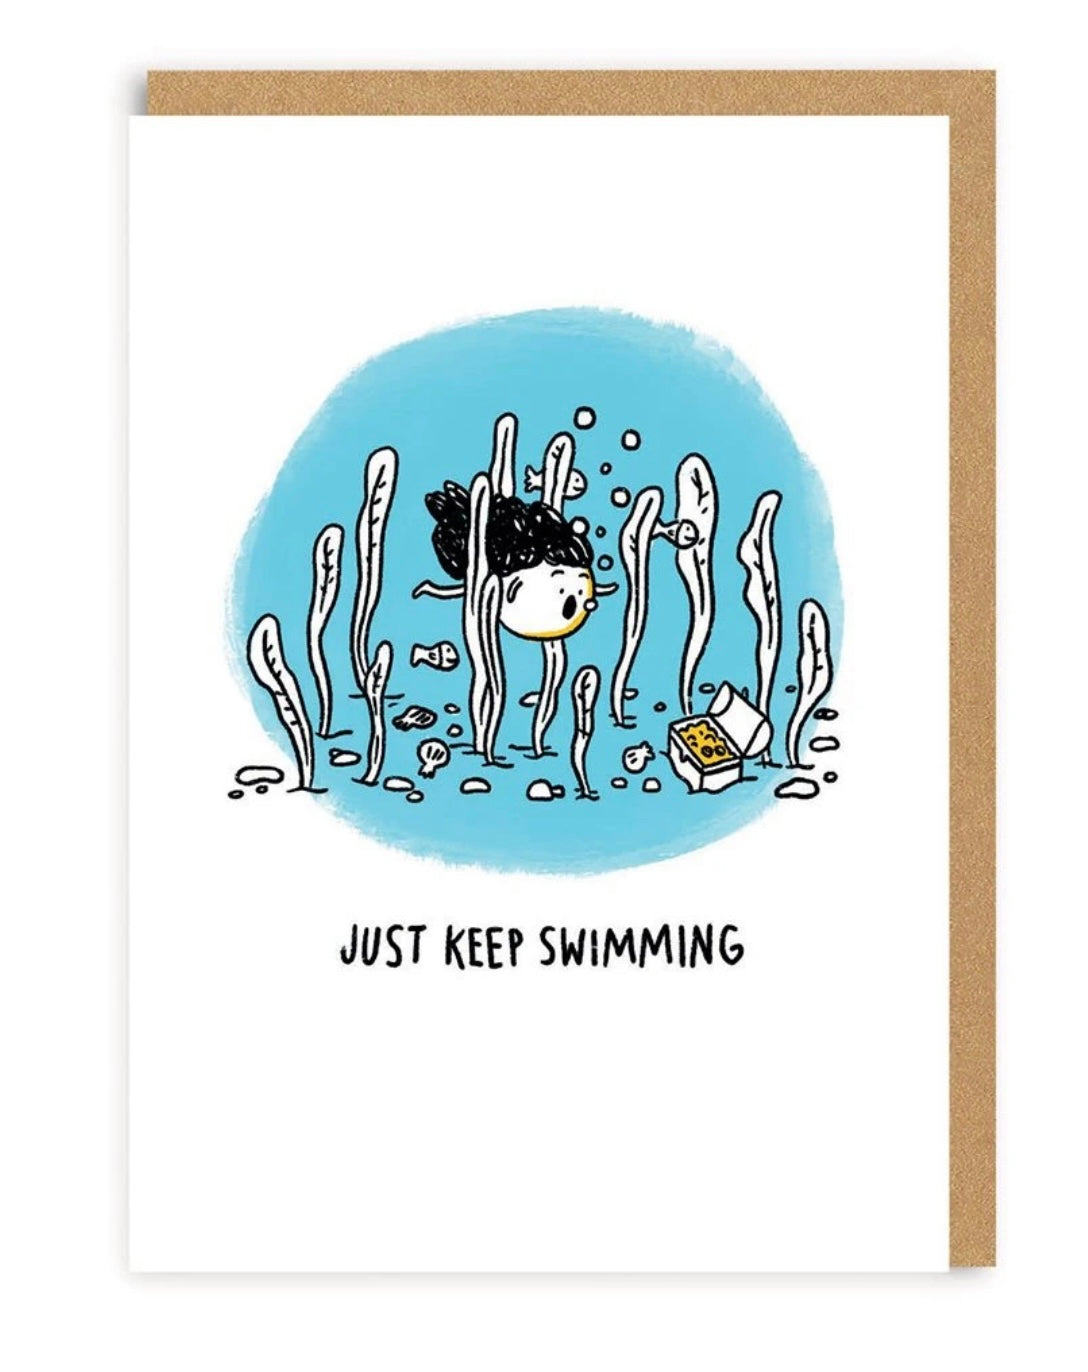 Just Keep Swimming Card